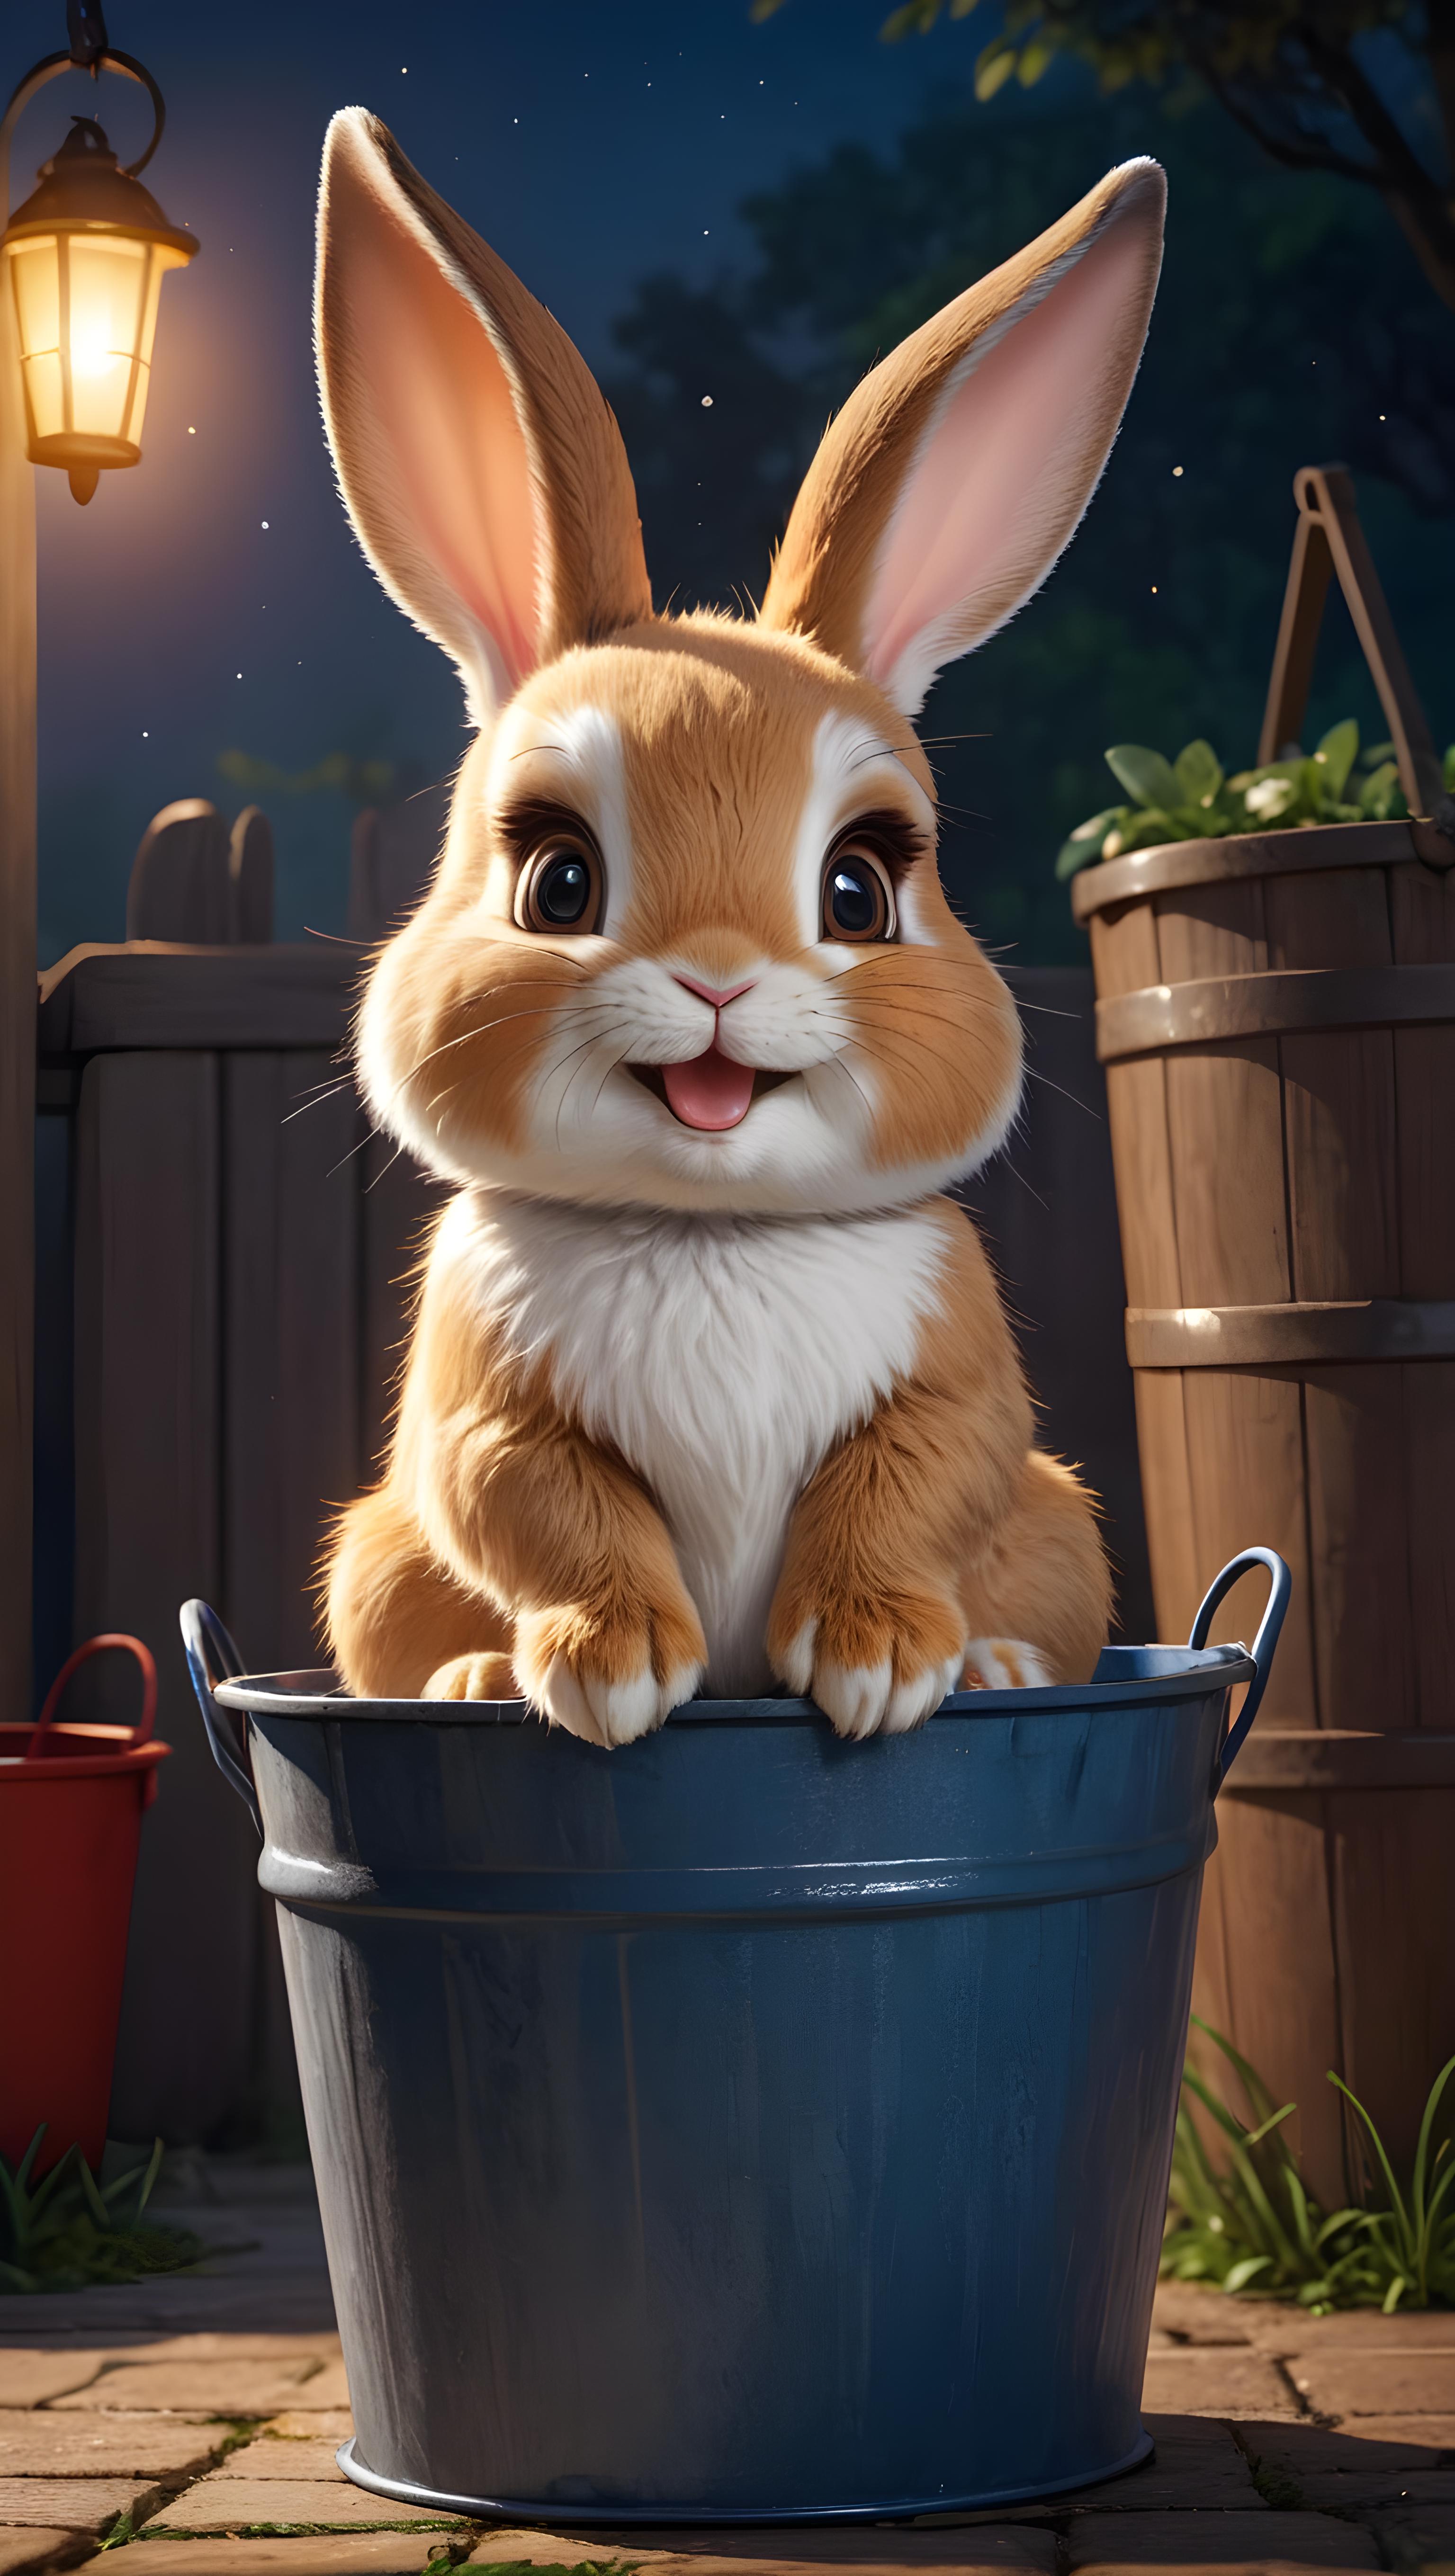 A cartoon rabbit sitting in a blue bucket.